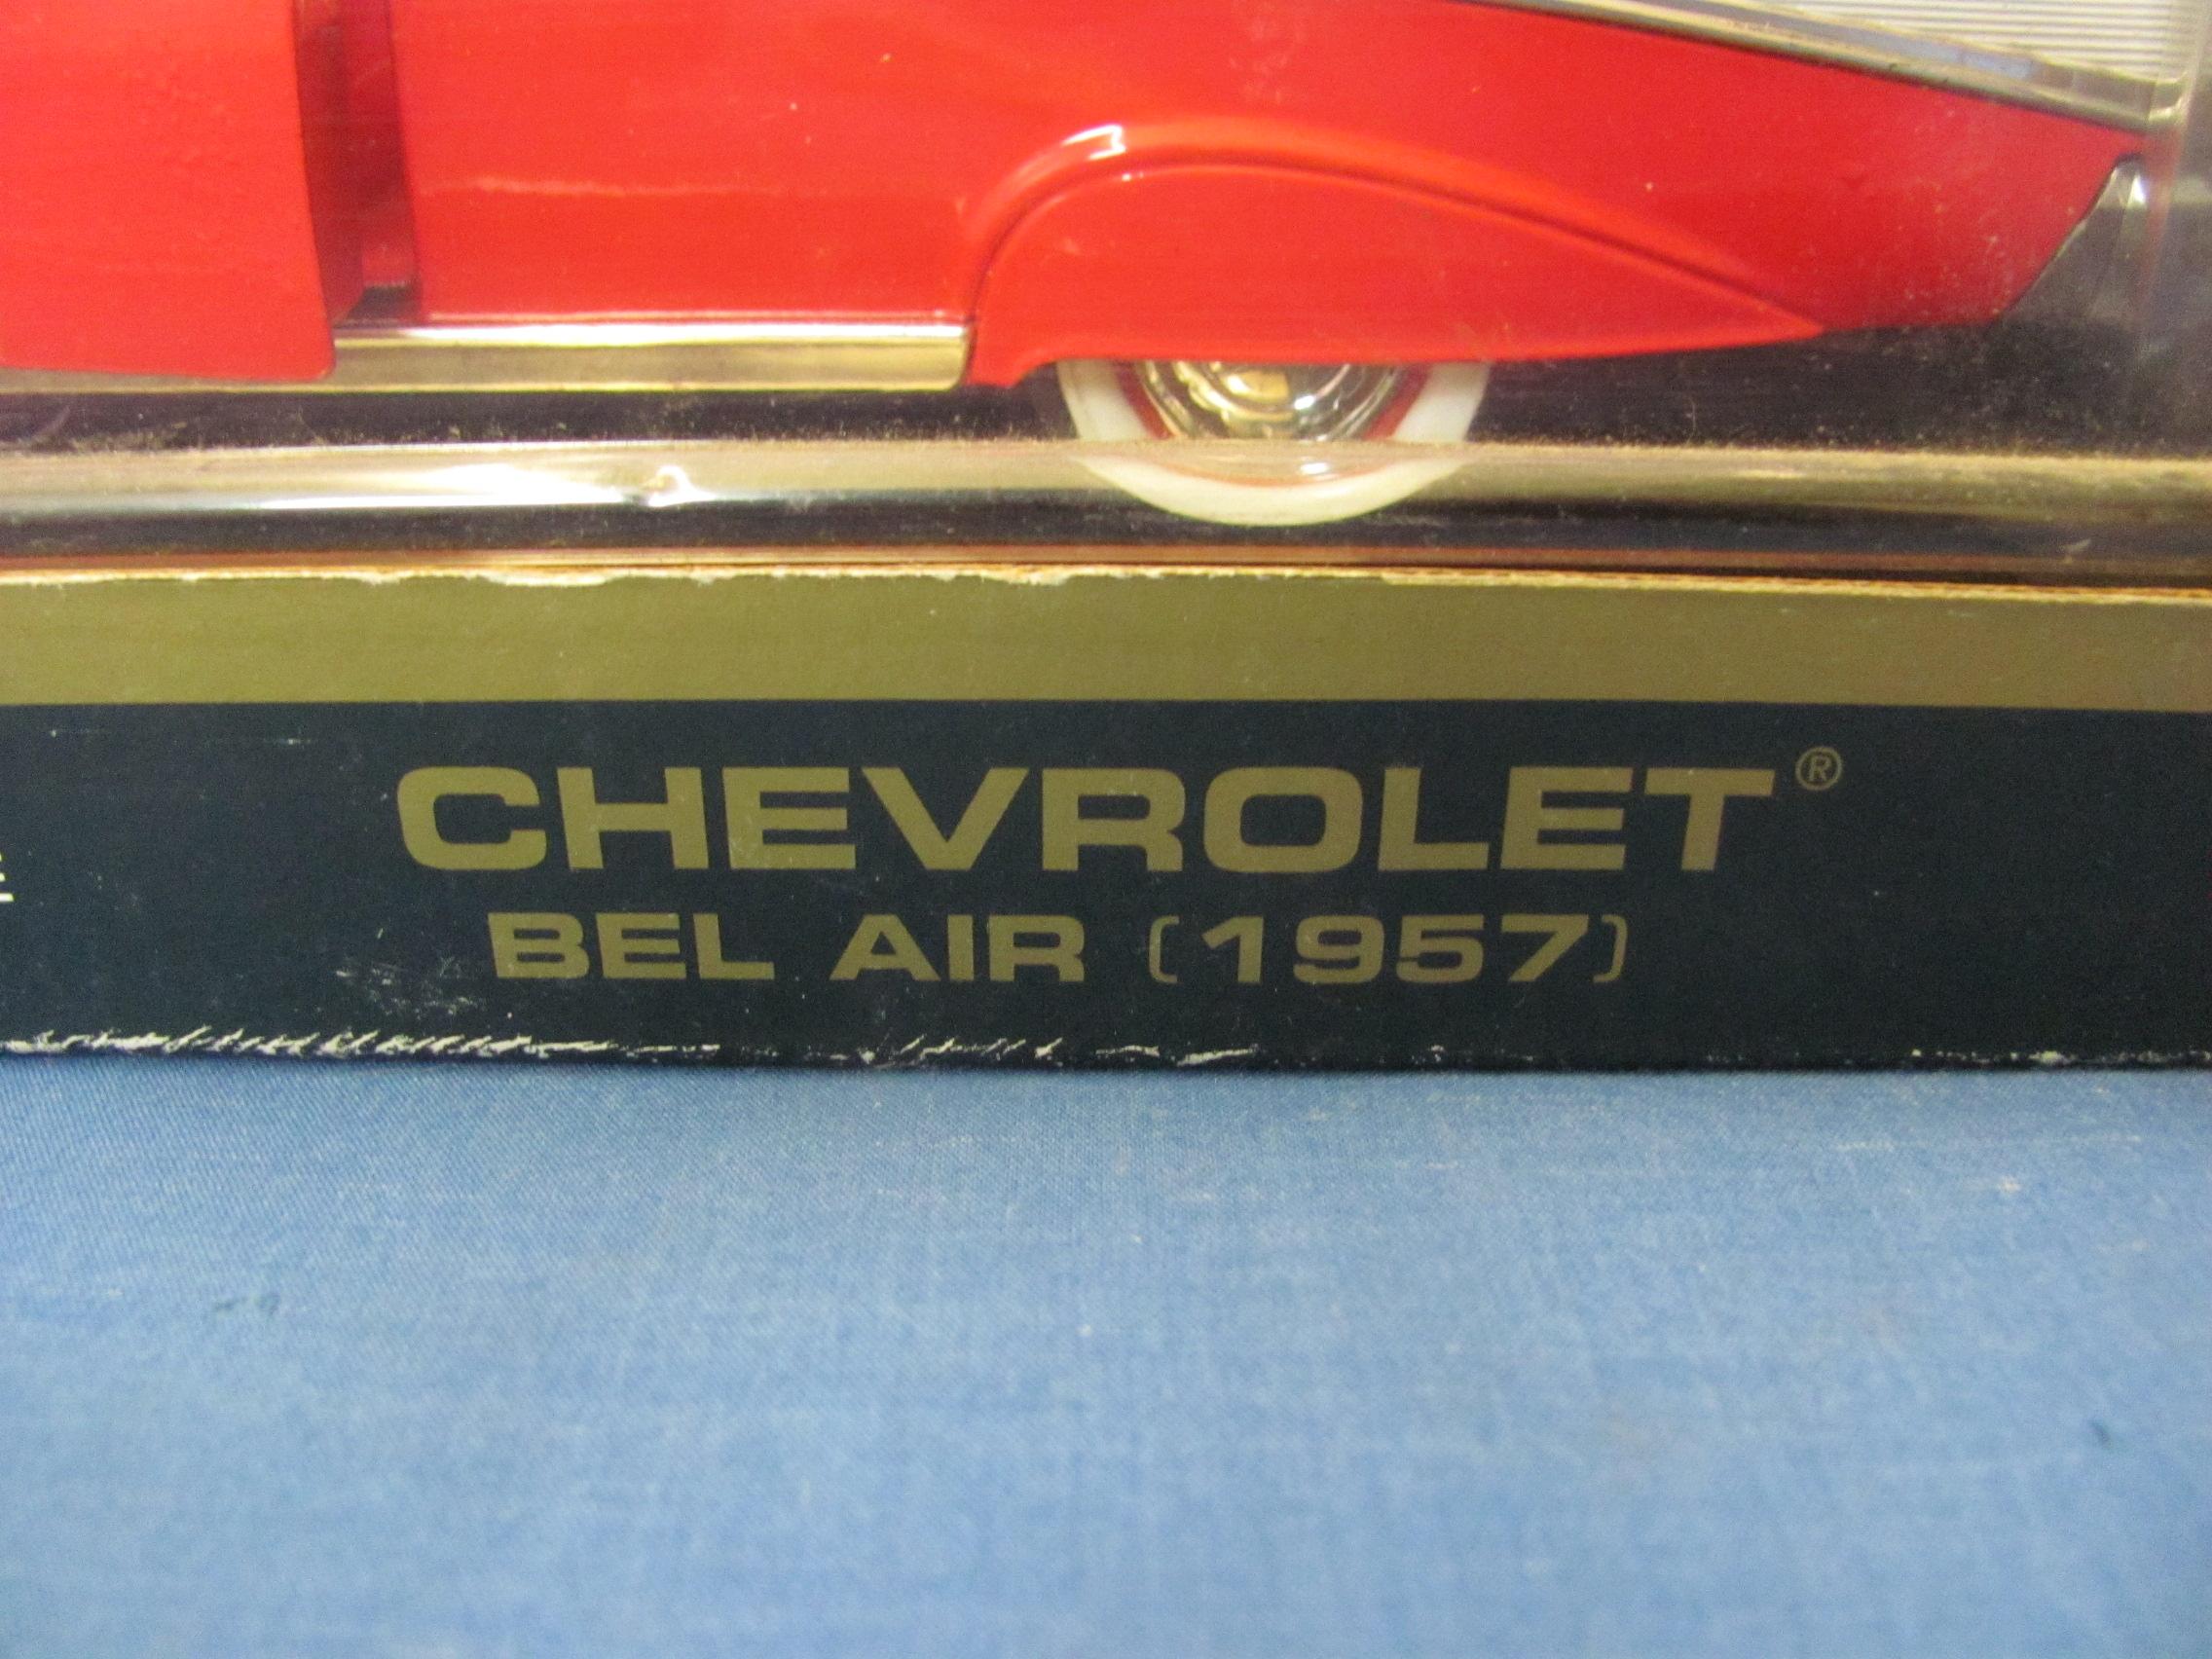 Road Tough Die Cast 1957 Chevrolet Bel Air – 1:18 Scale – Sealed